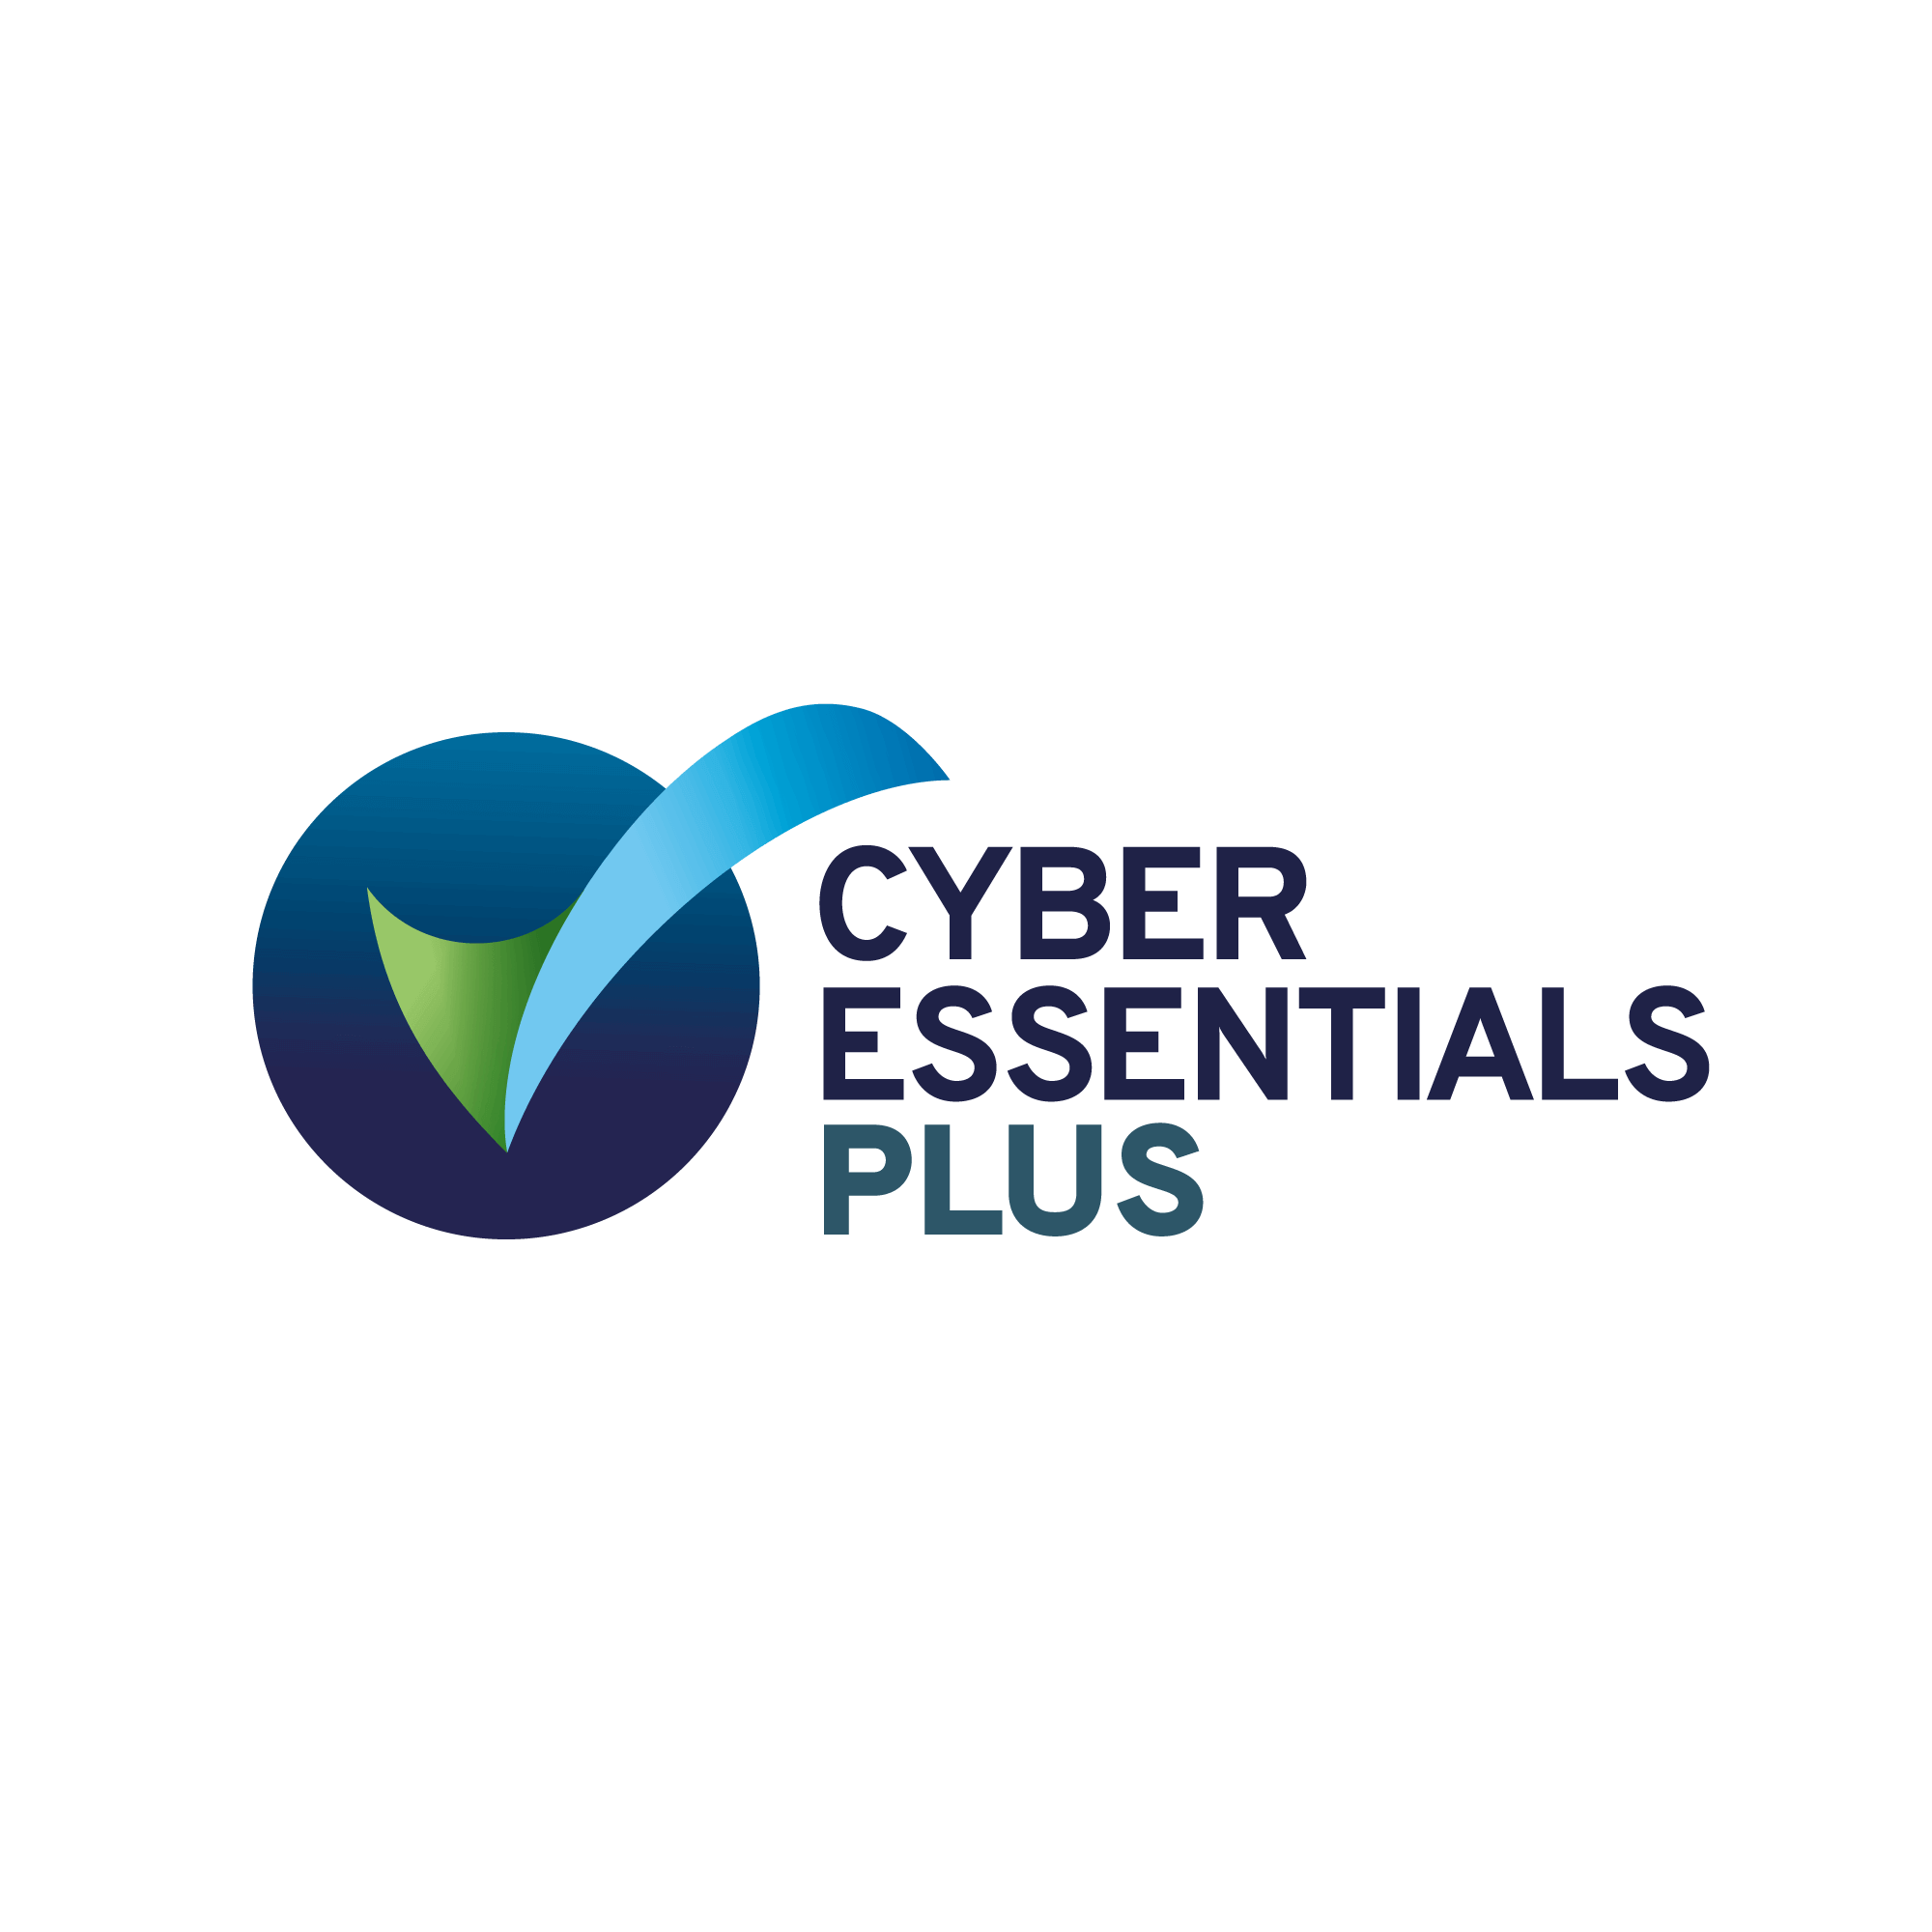 Cyber Essentials logo